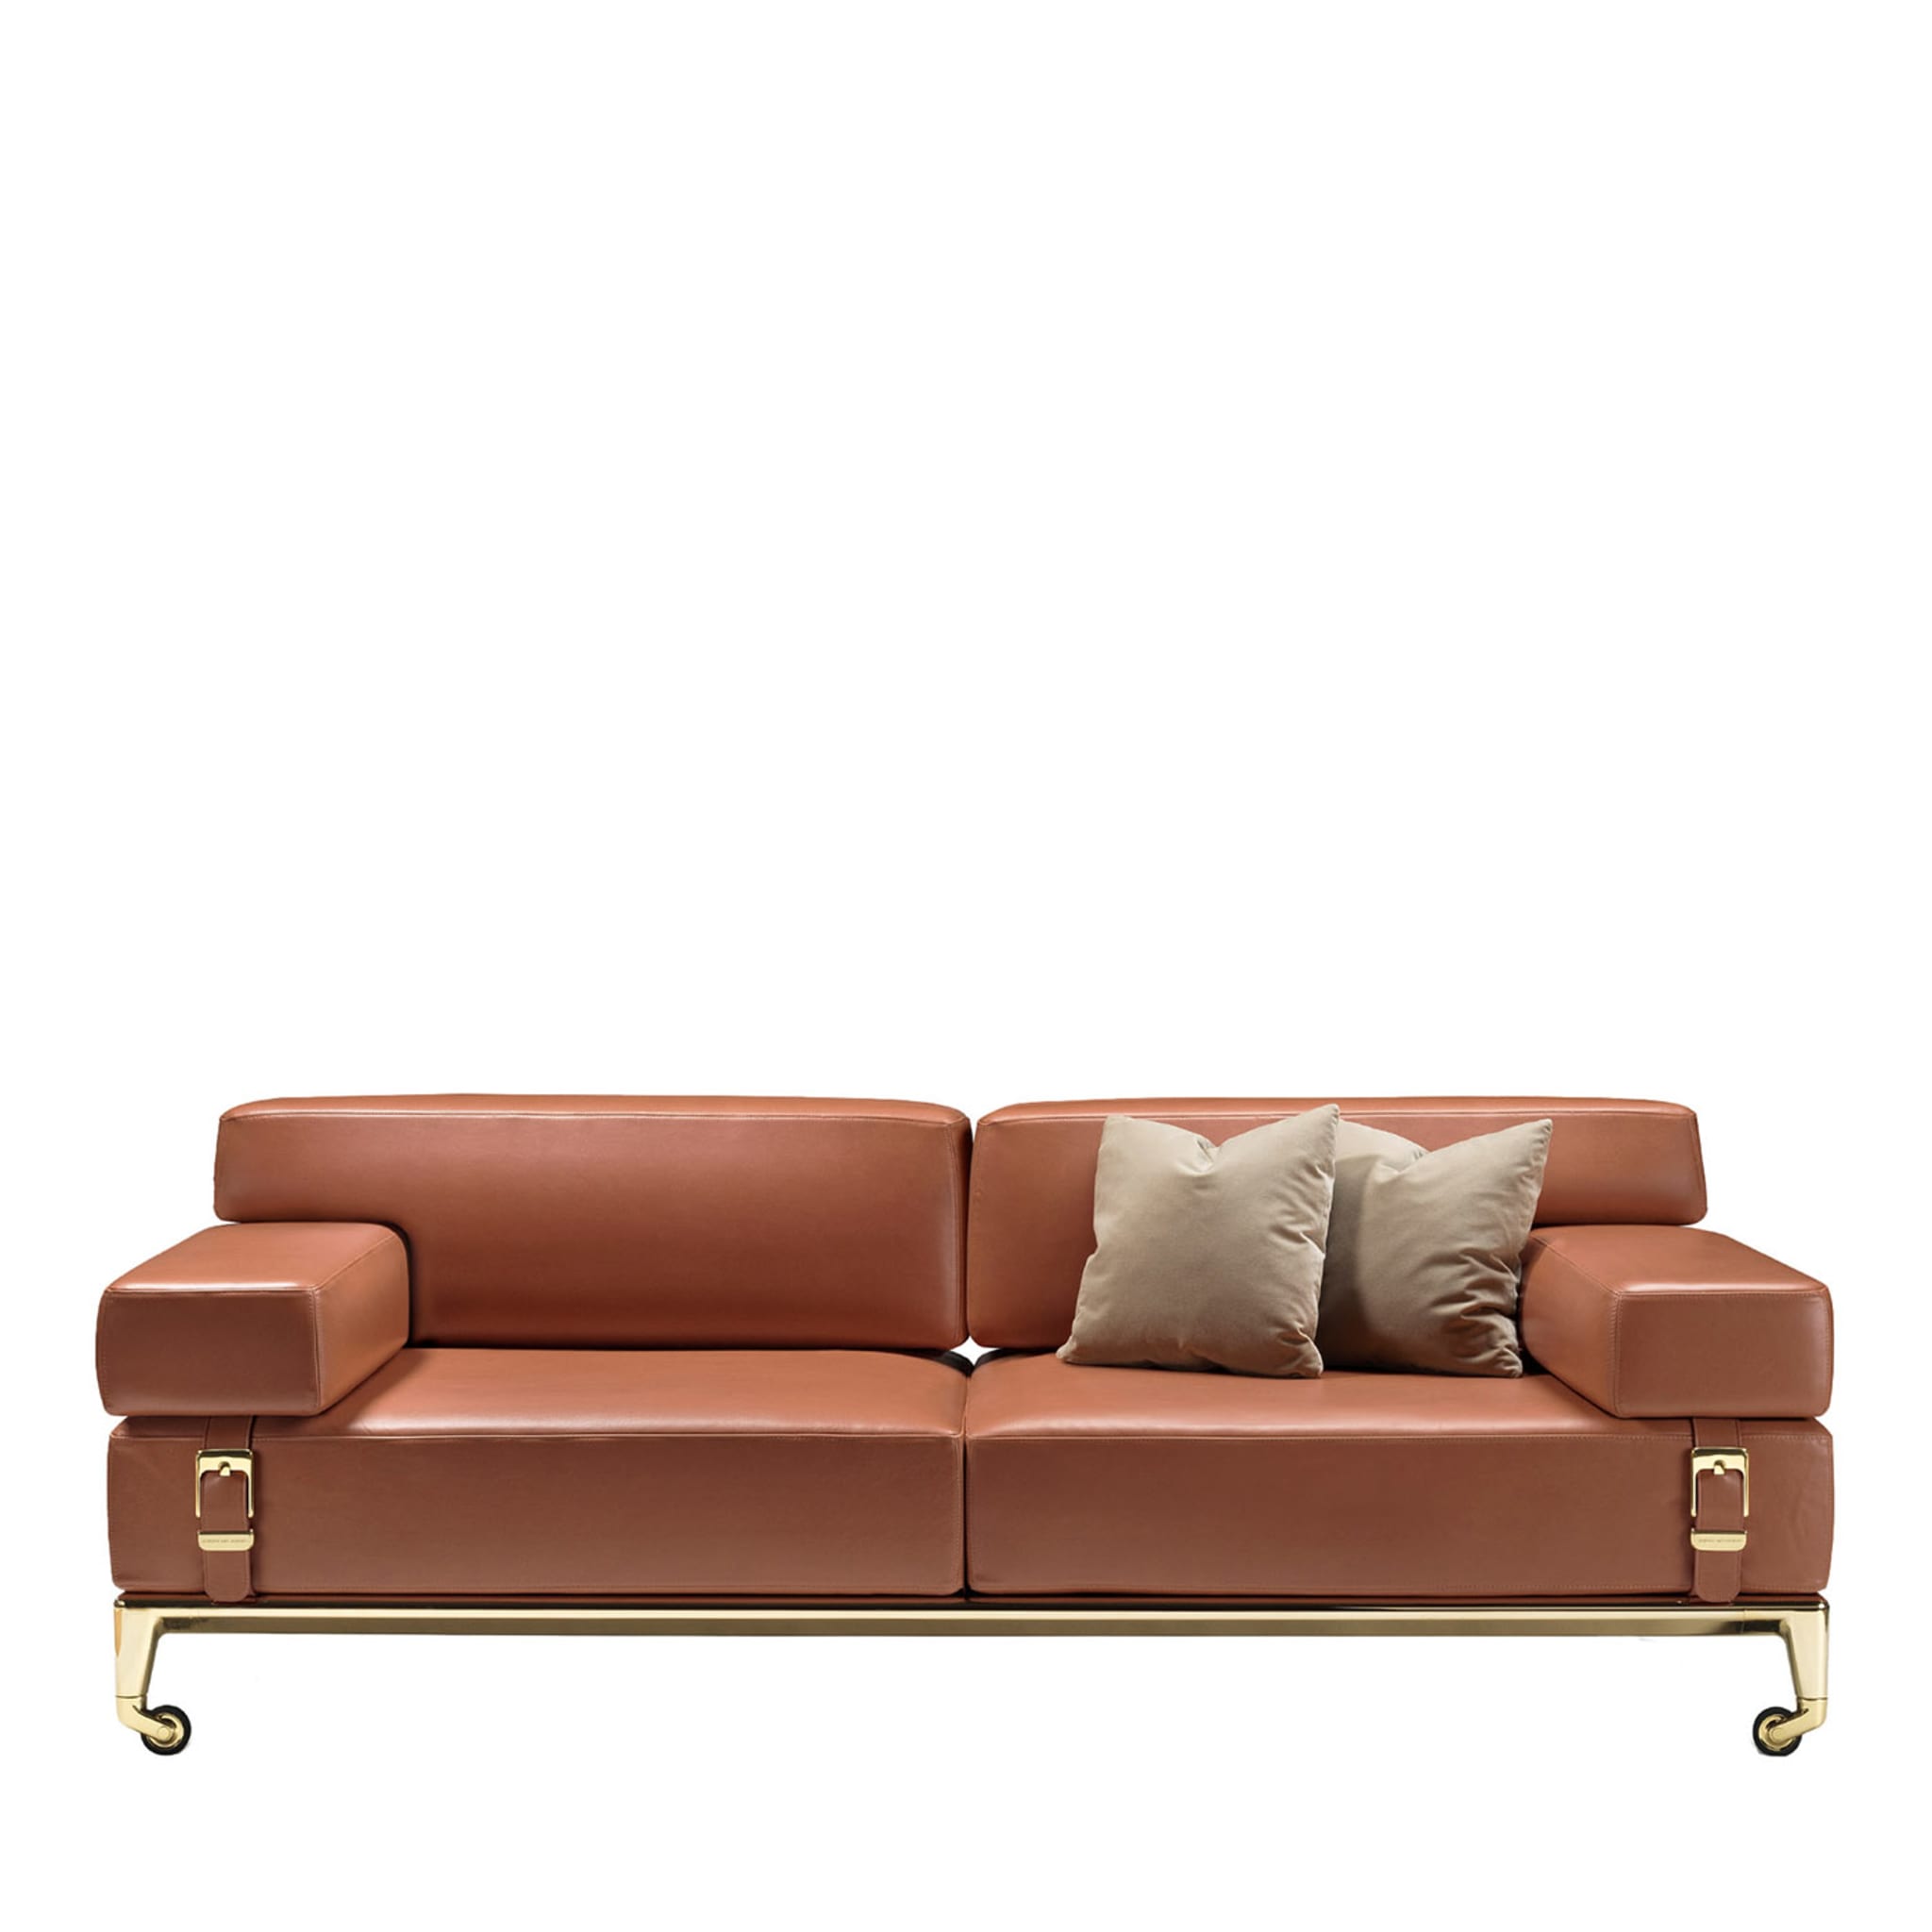 Shaker 2-sitzer orange sofa by Stefano Giovannoni - Hauptansicht